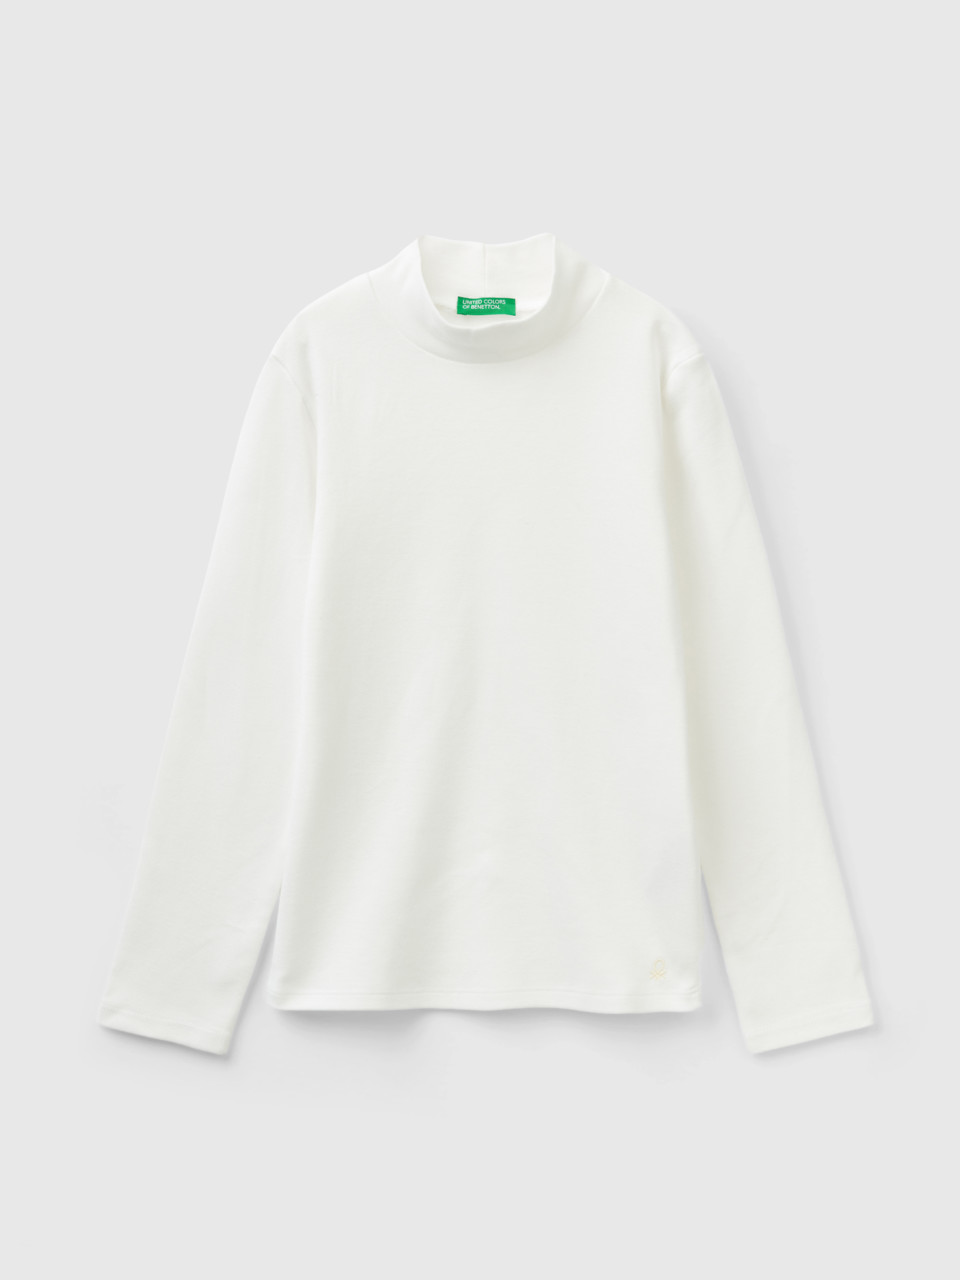 Benetton, T-shirt In Pure Organic Cotton, Creamy White, Kids